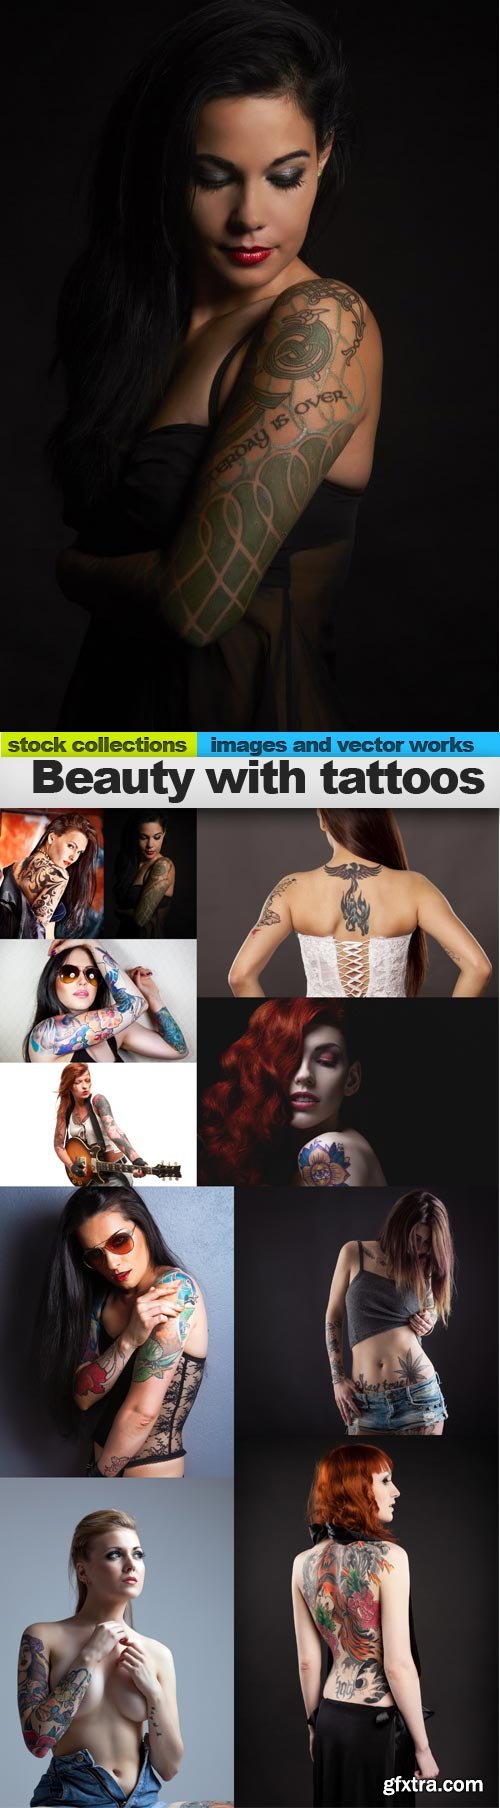 Beauty with tattoos, 10 x UHQ JPEG